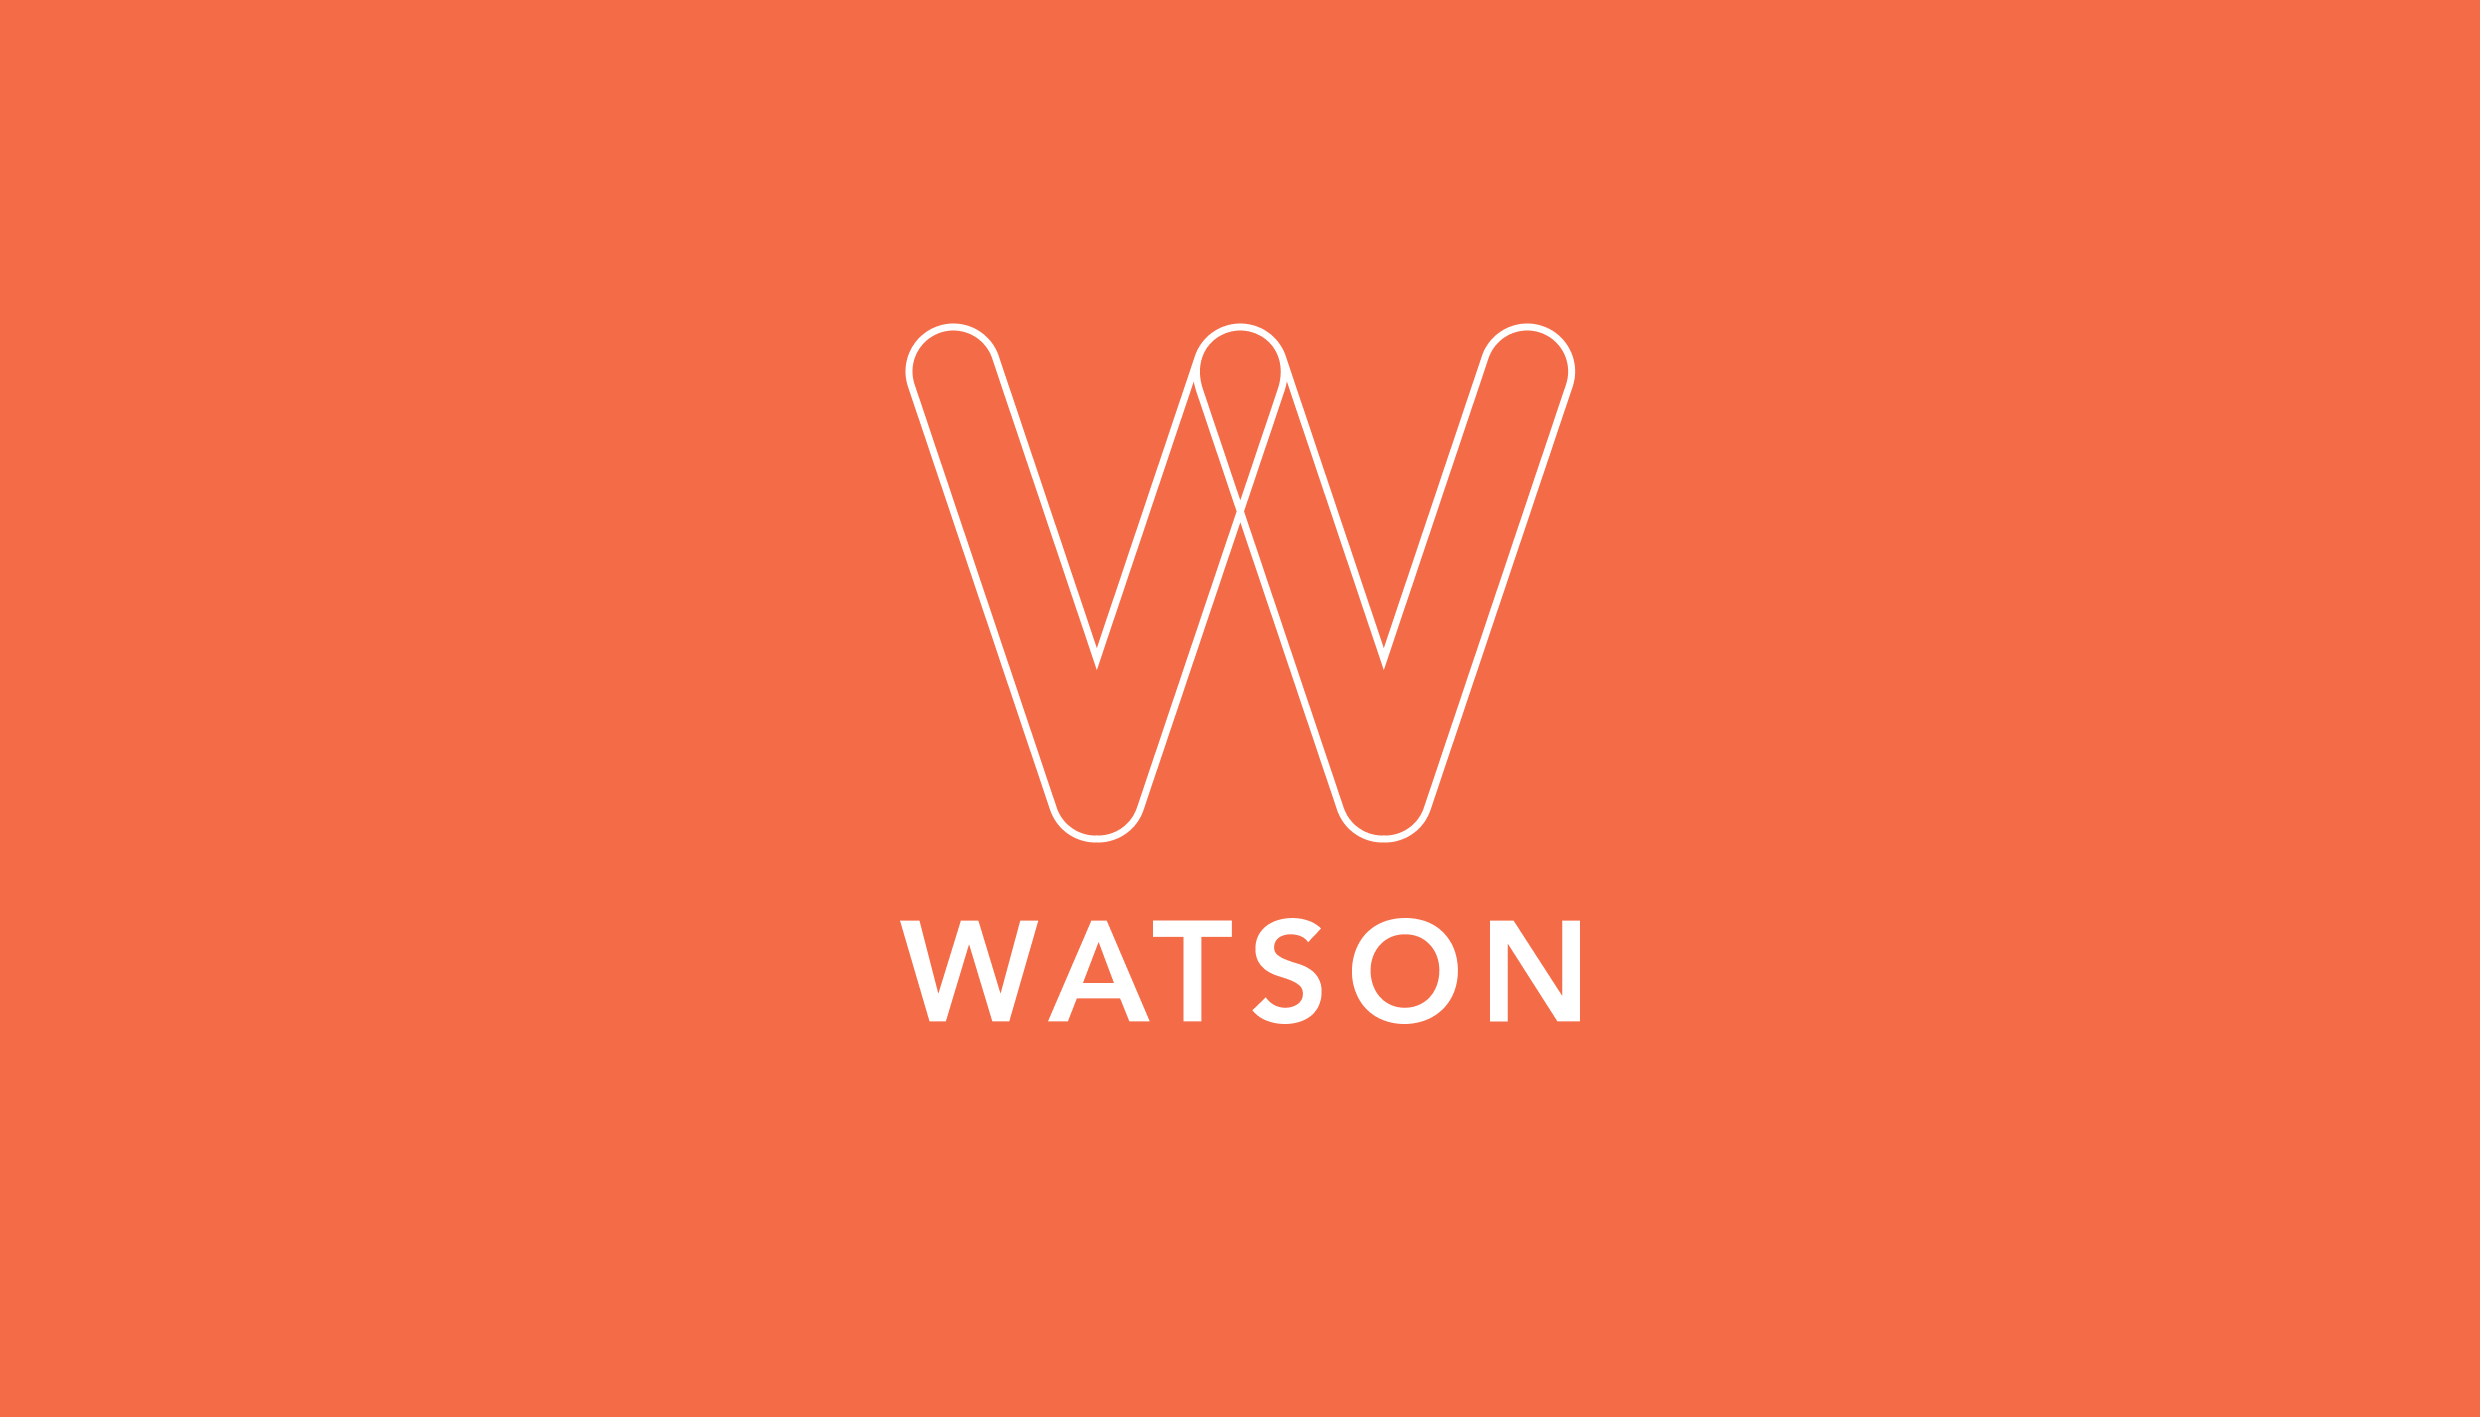 Watson Fellowship Logo